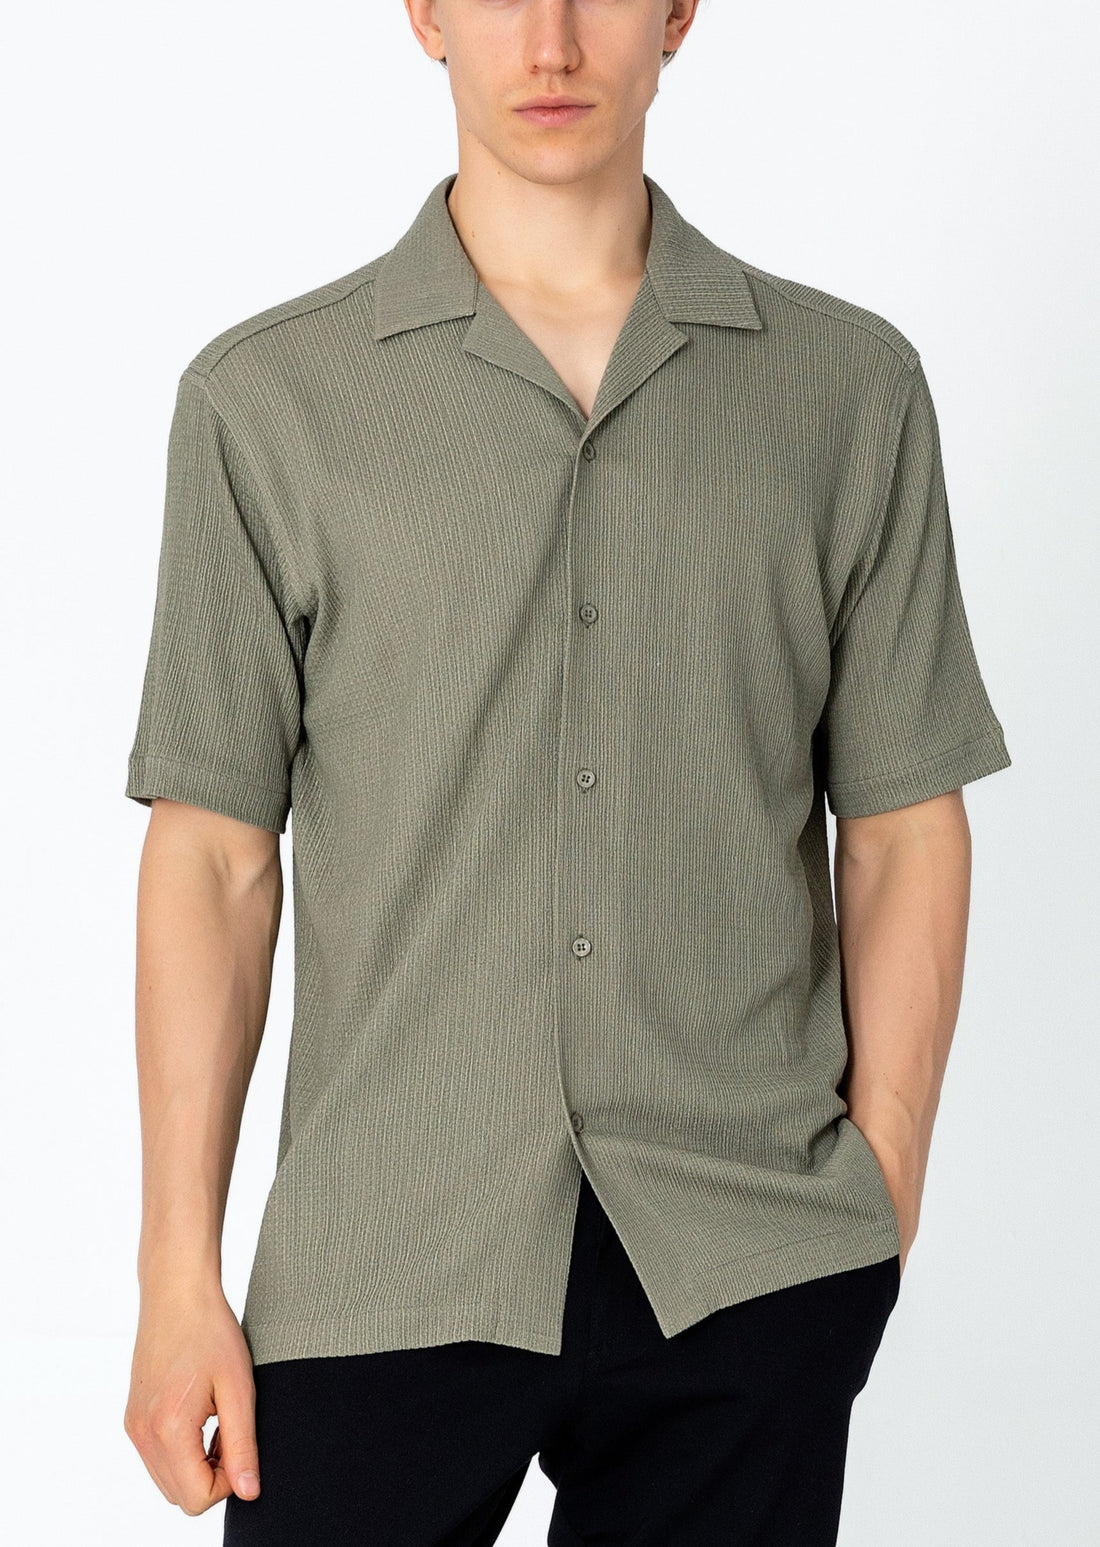 Oversized Camp Collar Shirt - Khaki